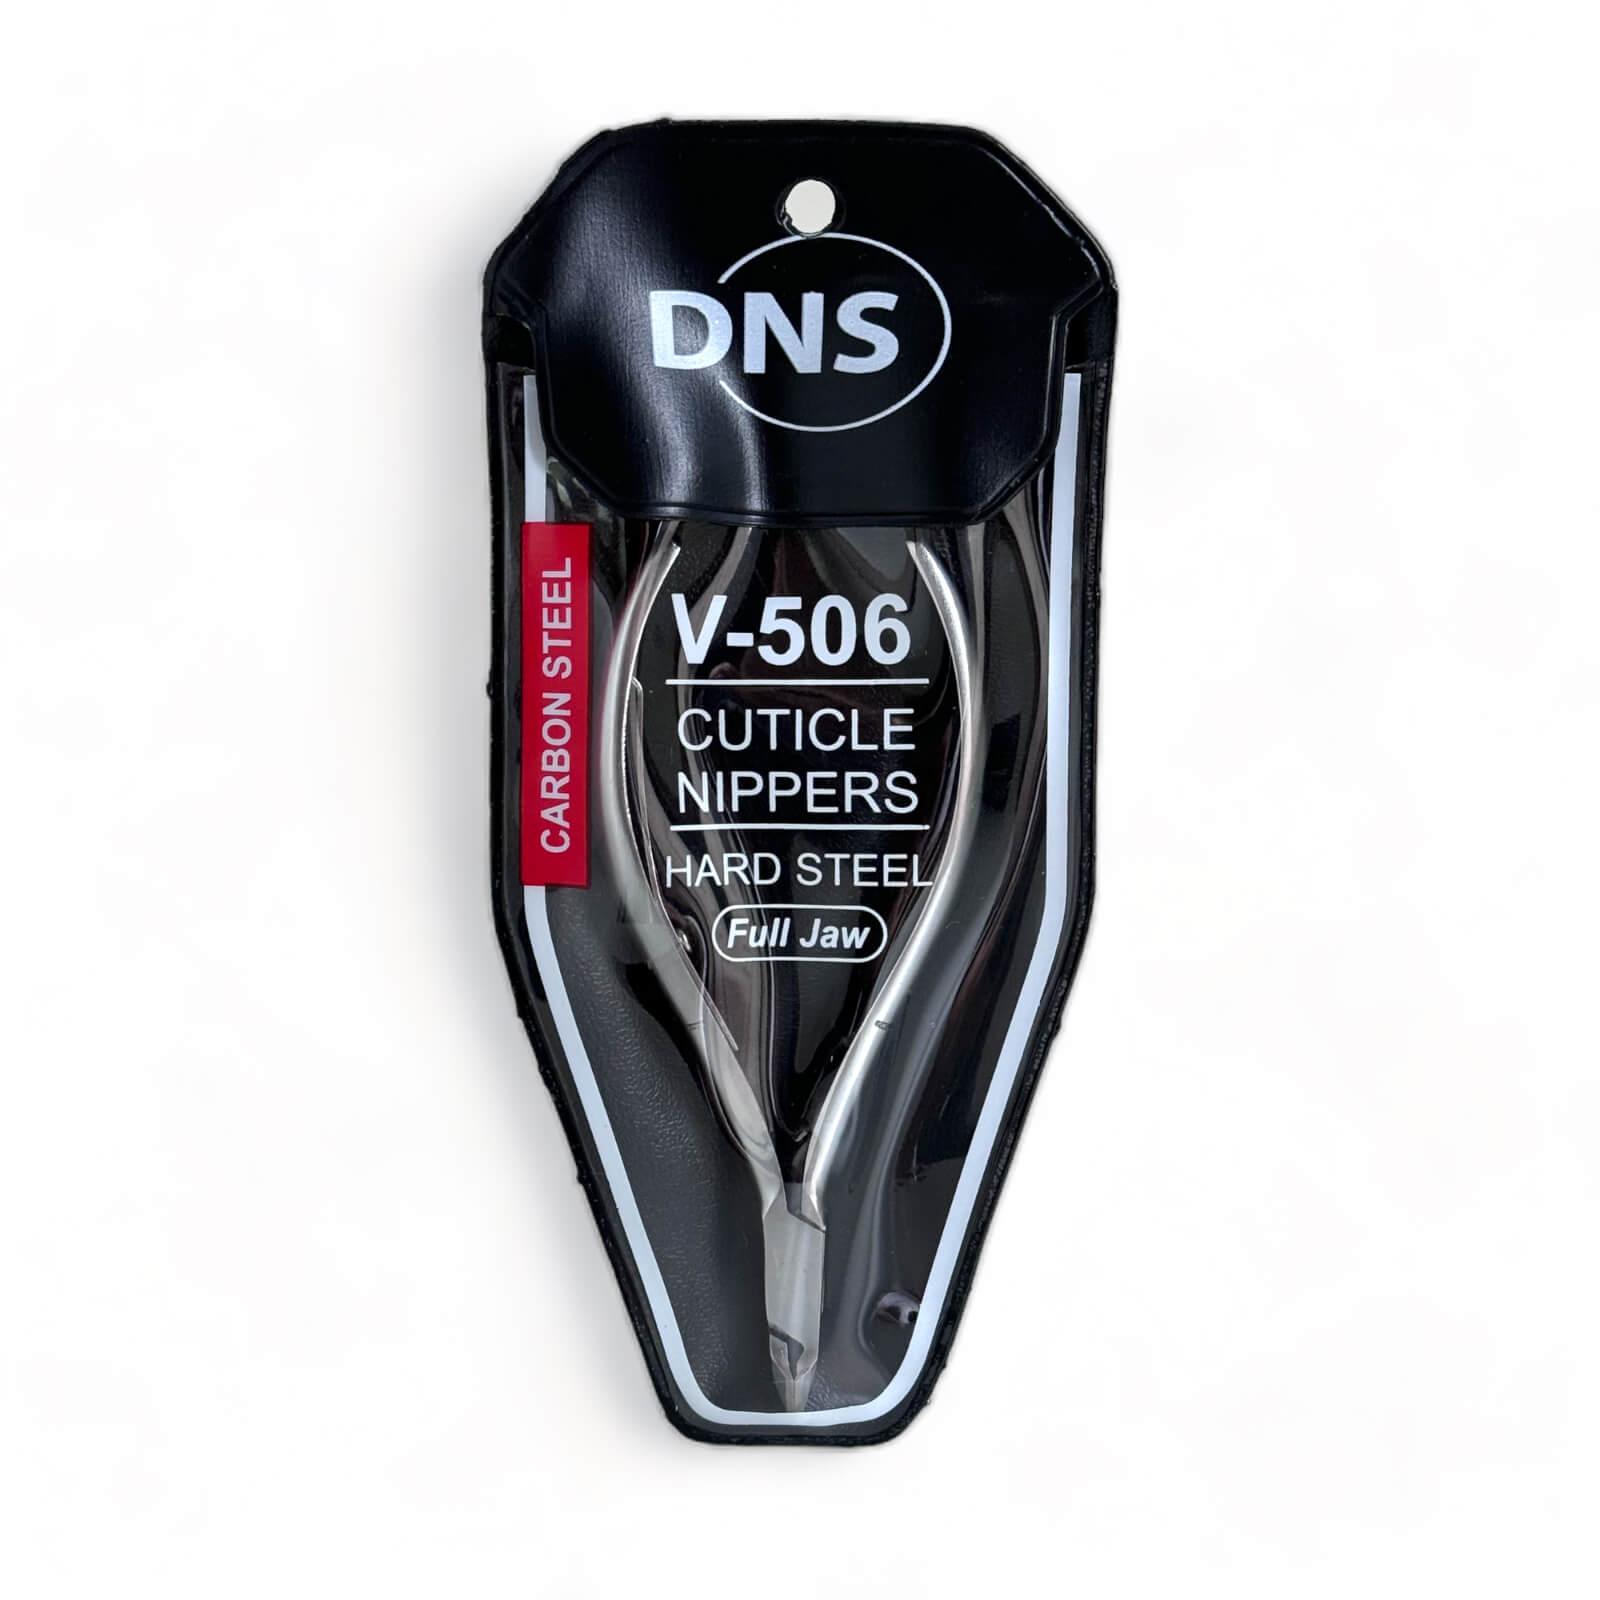 DNS Cuticle Nipper Hard Steel V506 Full Jaw (Pack of 5)